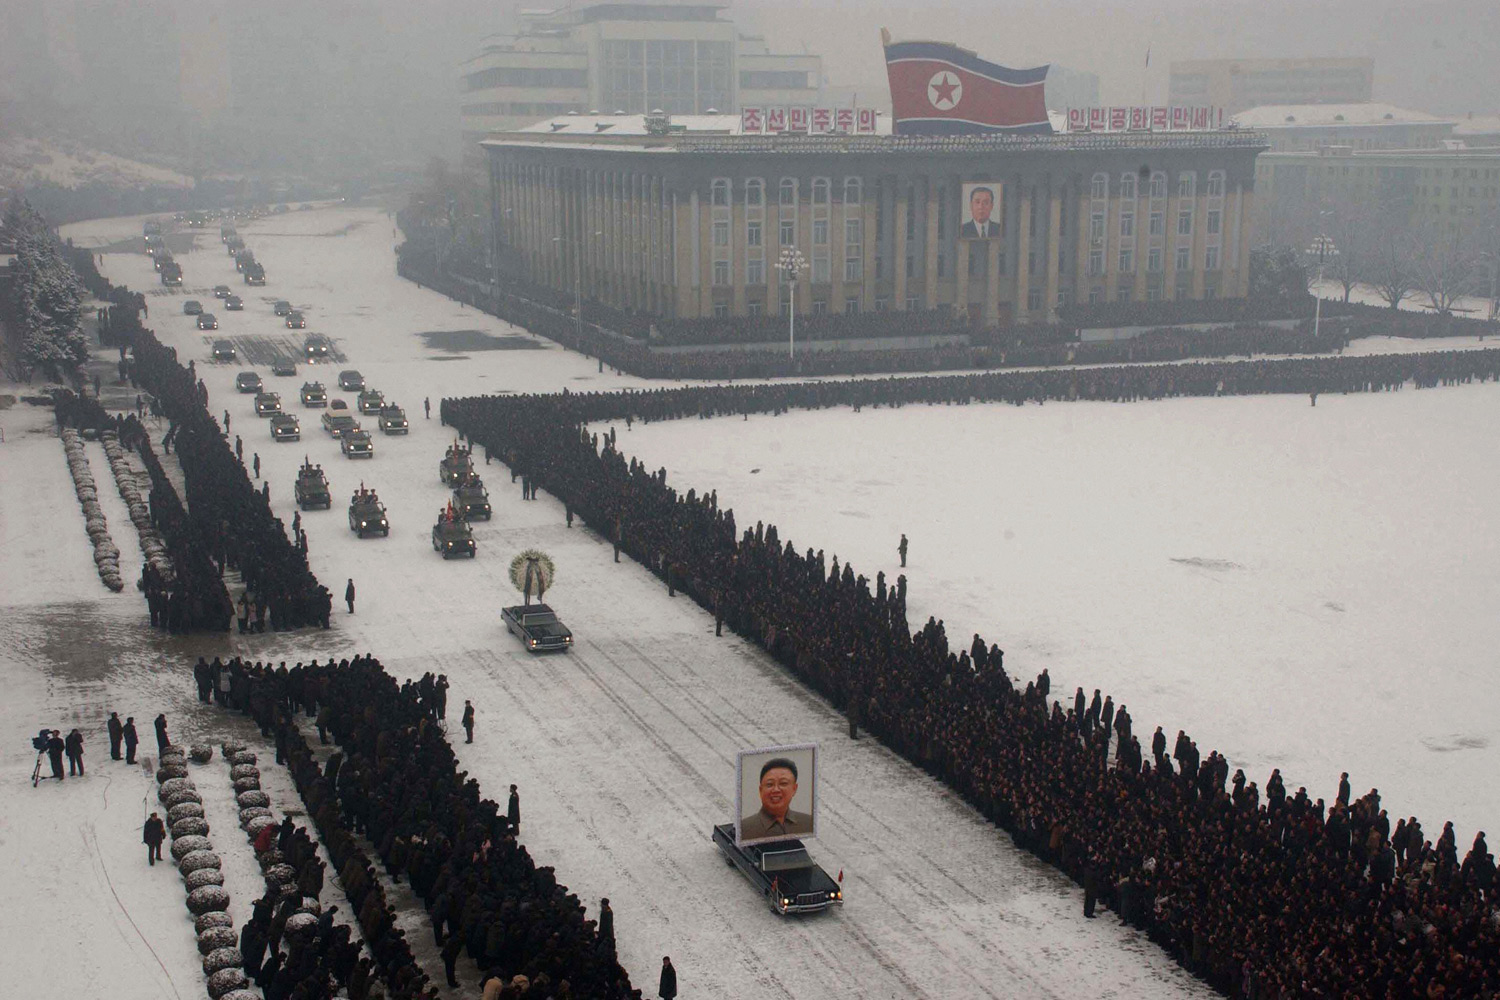 Kim Jong Il photoshopped photograph